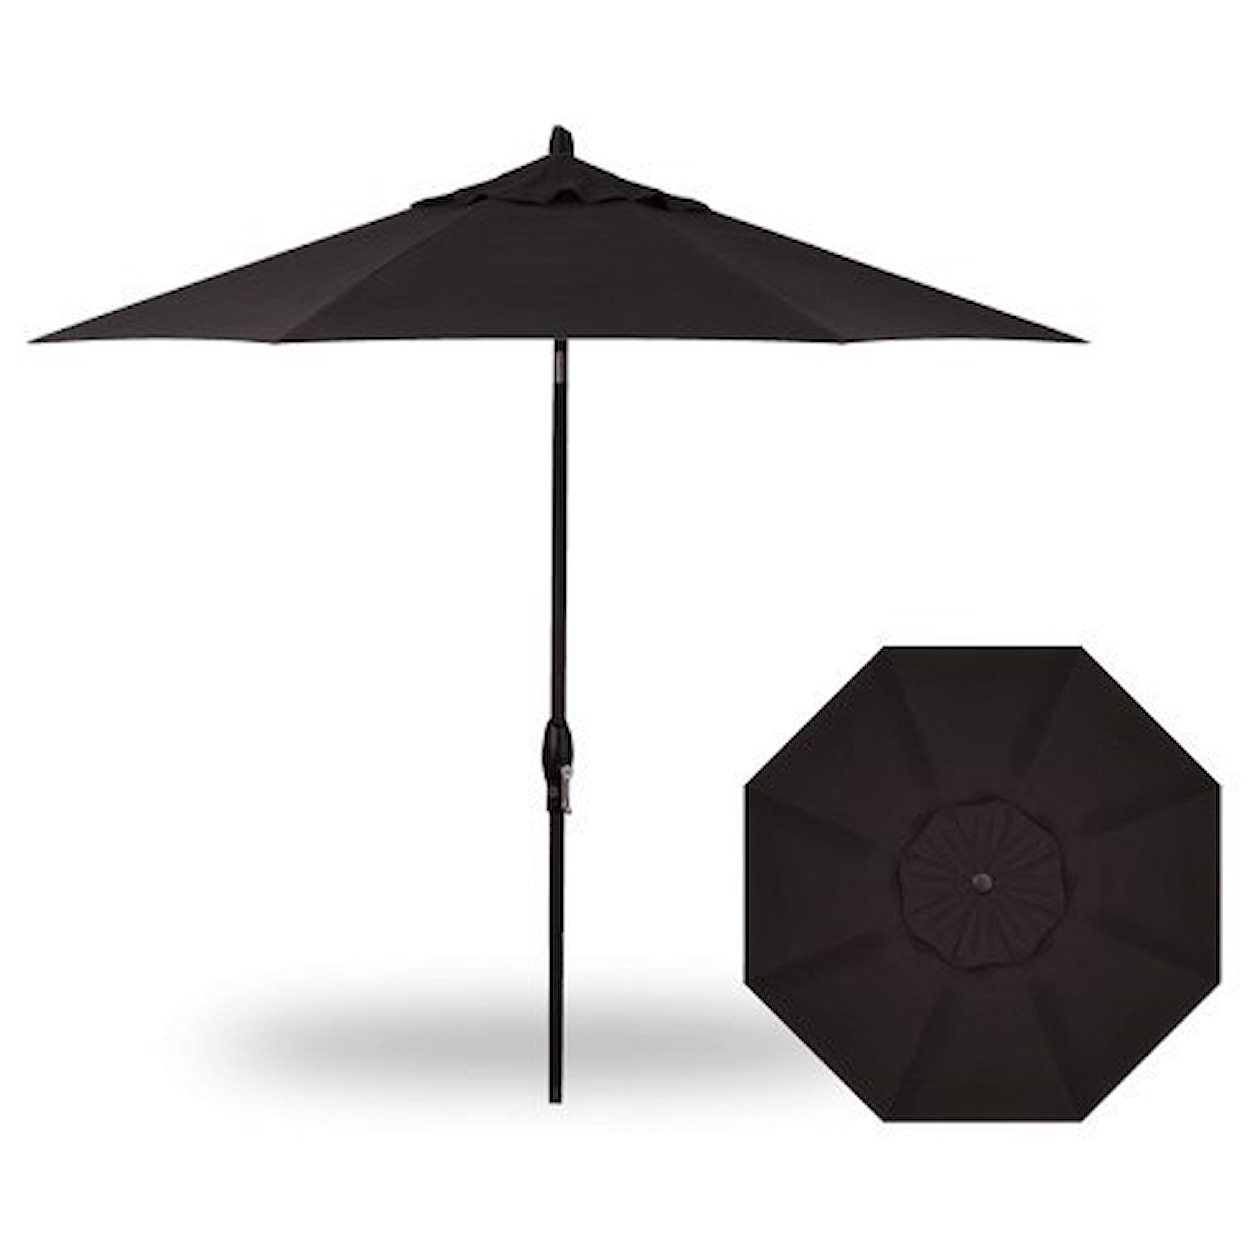 Treasure Garden Market Umbrellas 9' Auto Tilt Market Umbrella